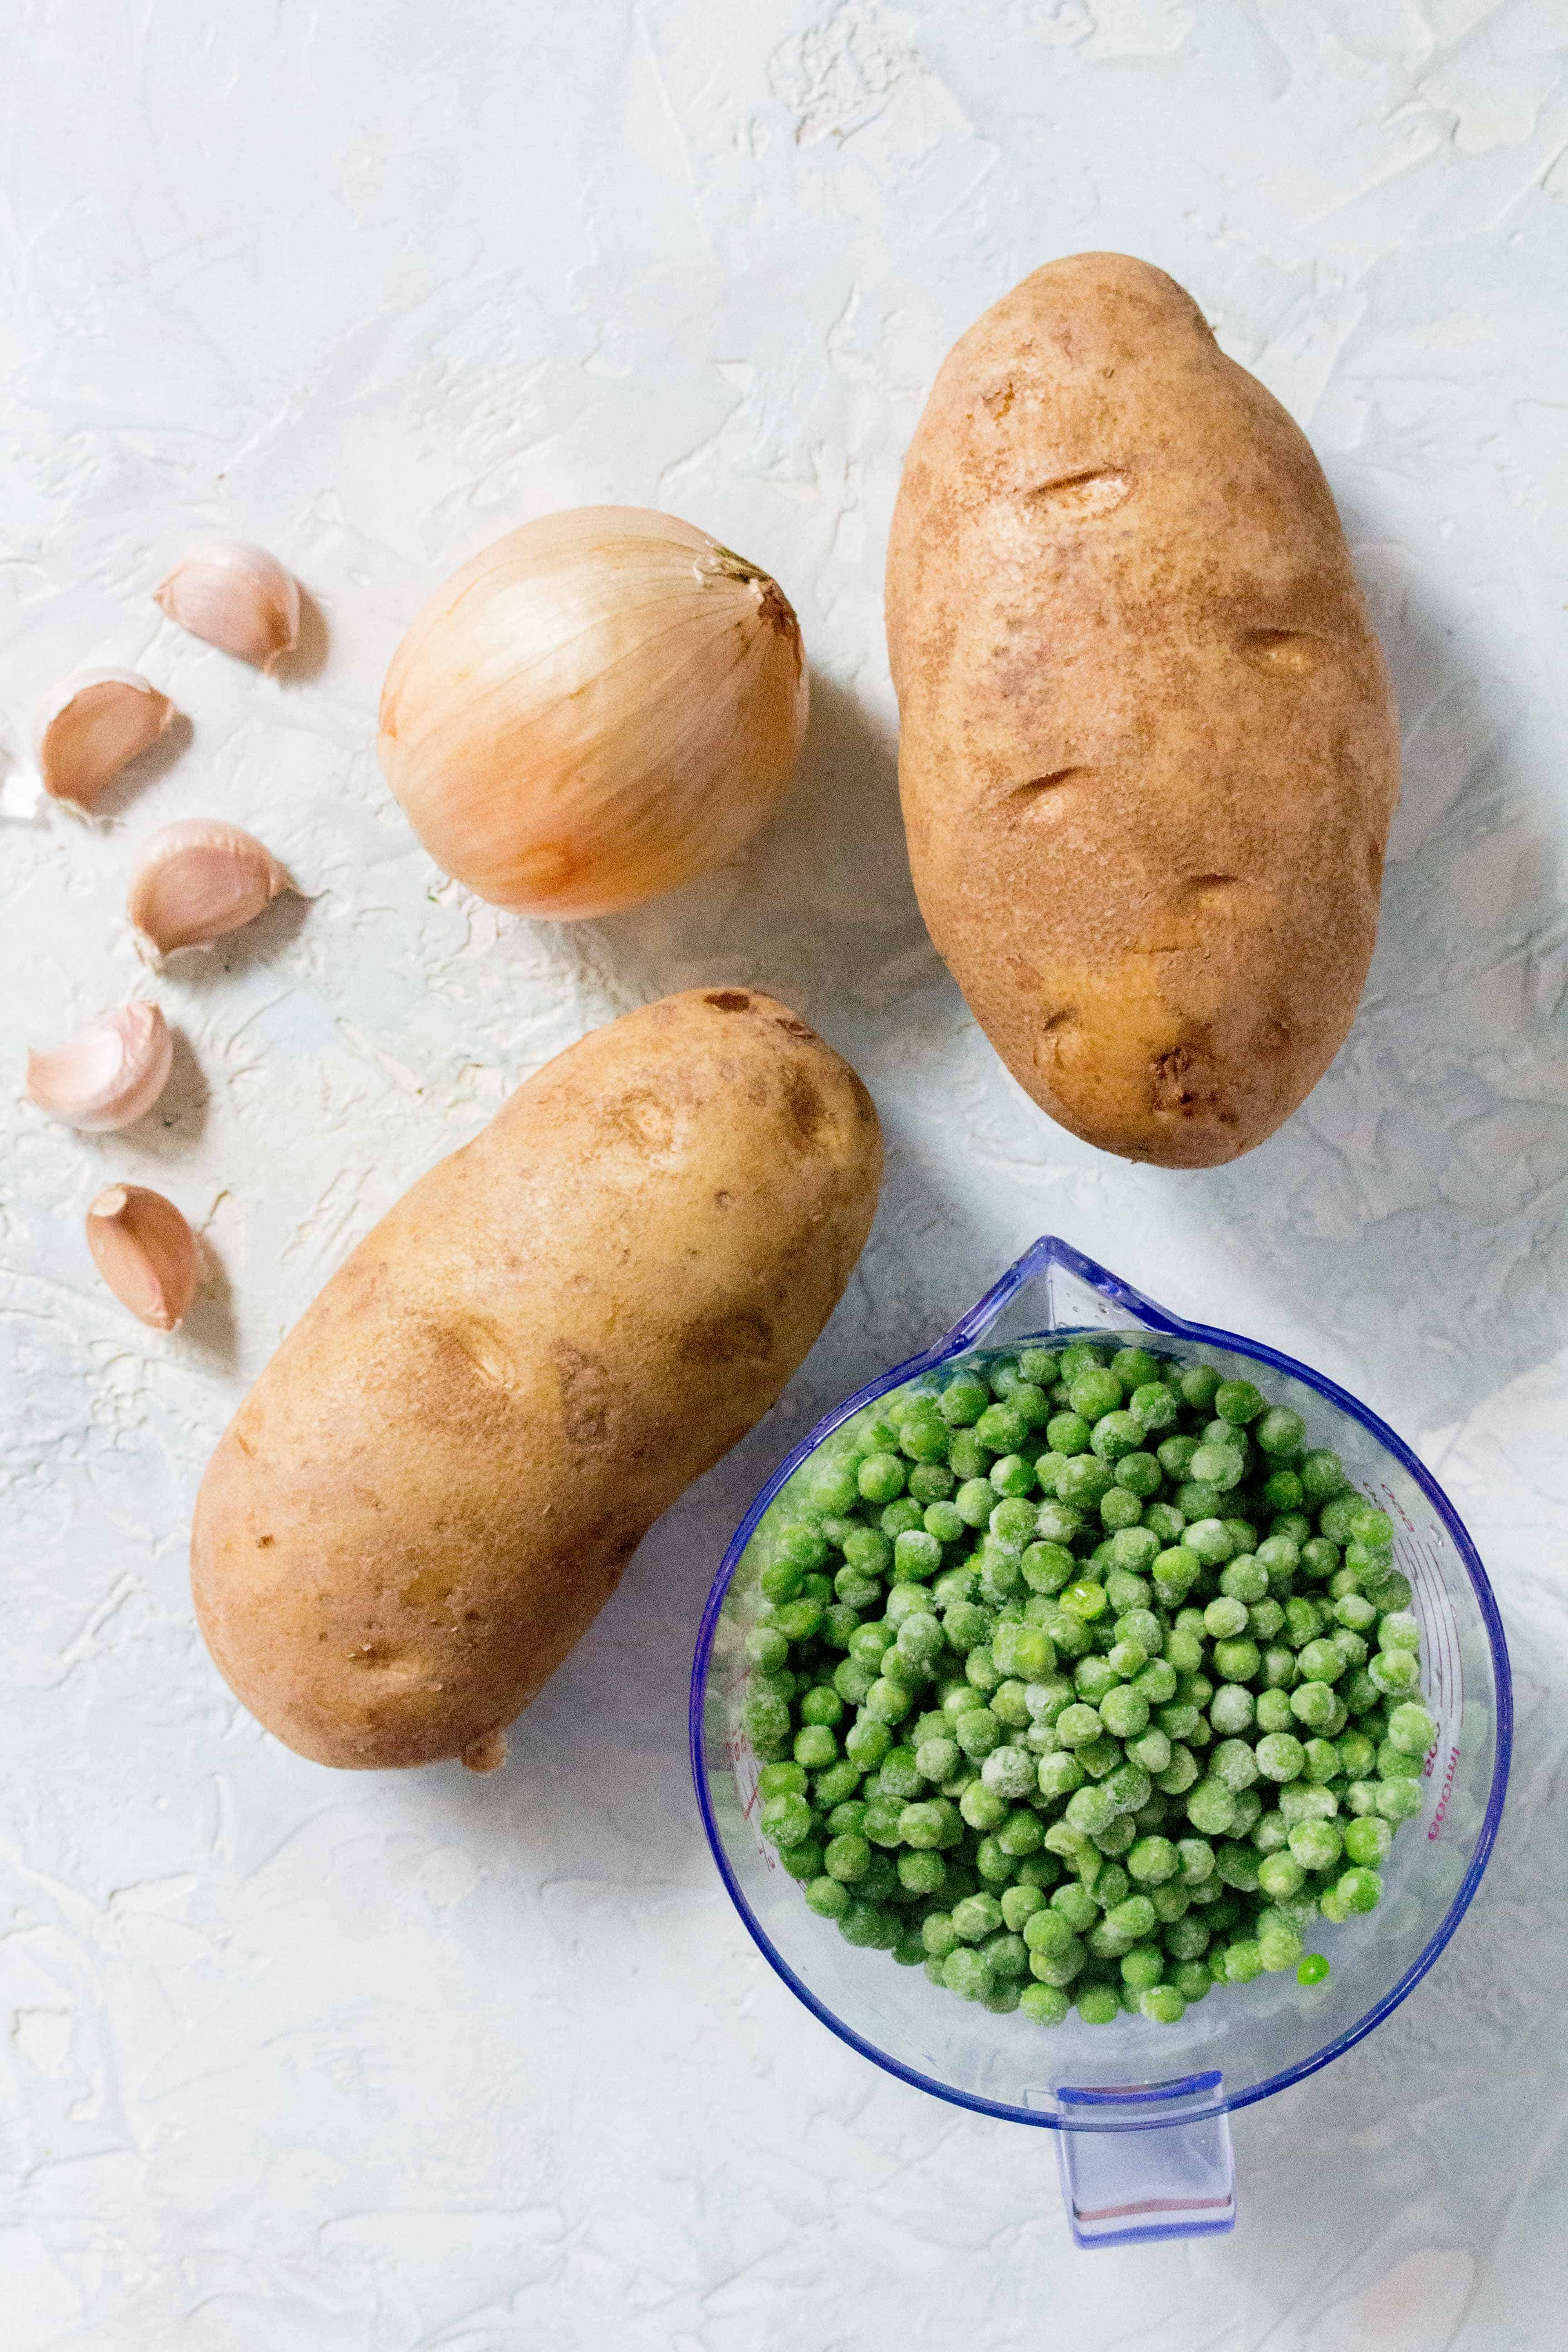 What You'll Need To Make This Pea Potato Soup